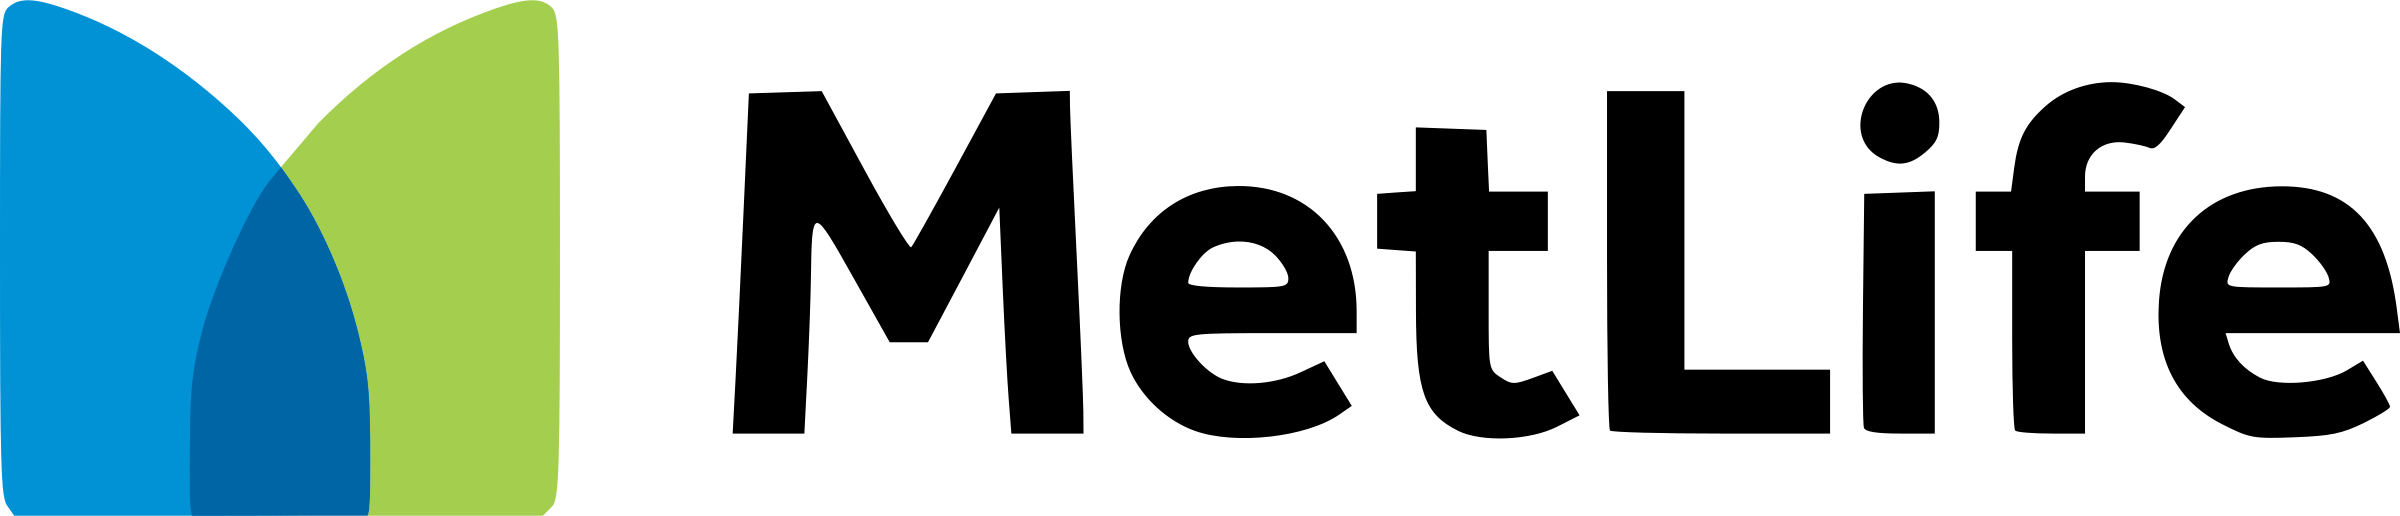 metlife-1-logo-png-transparent.png